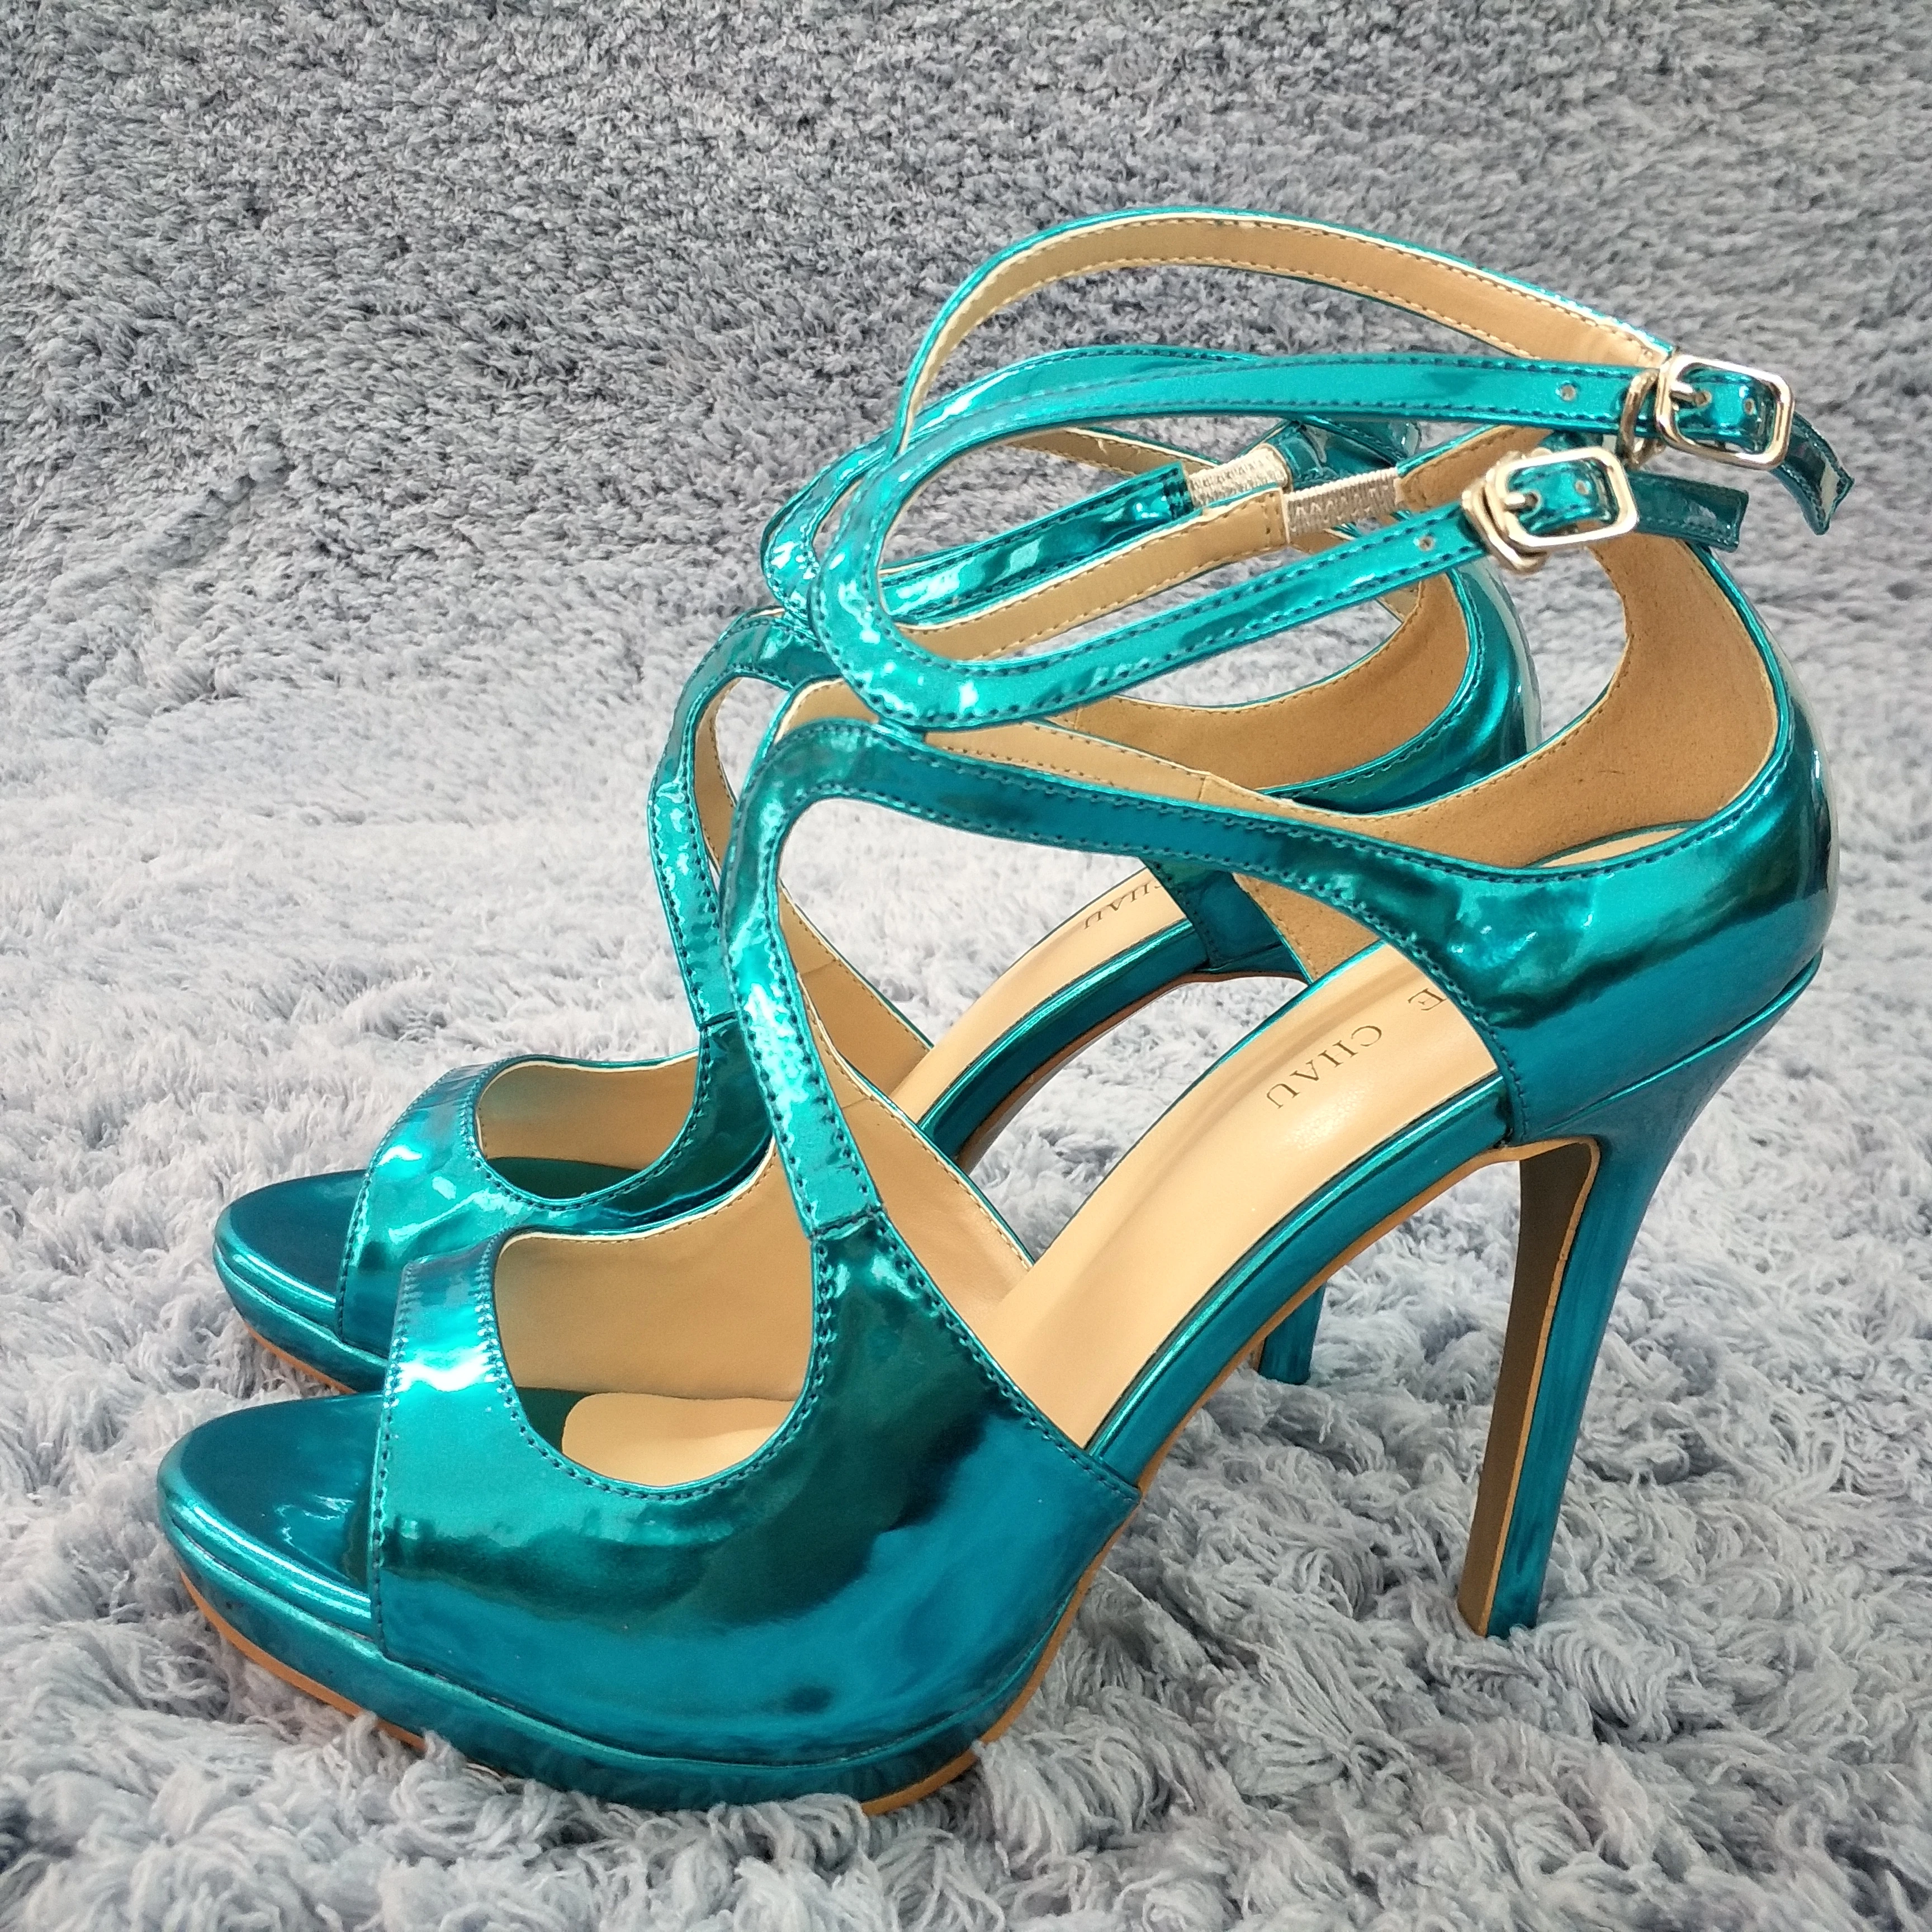 turquoise stiletto heels